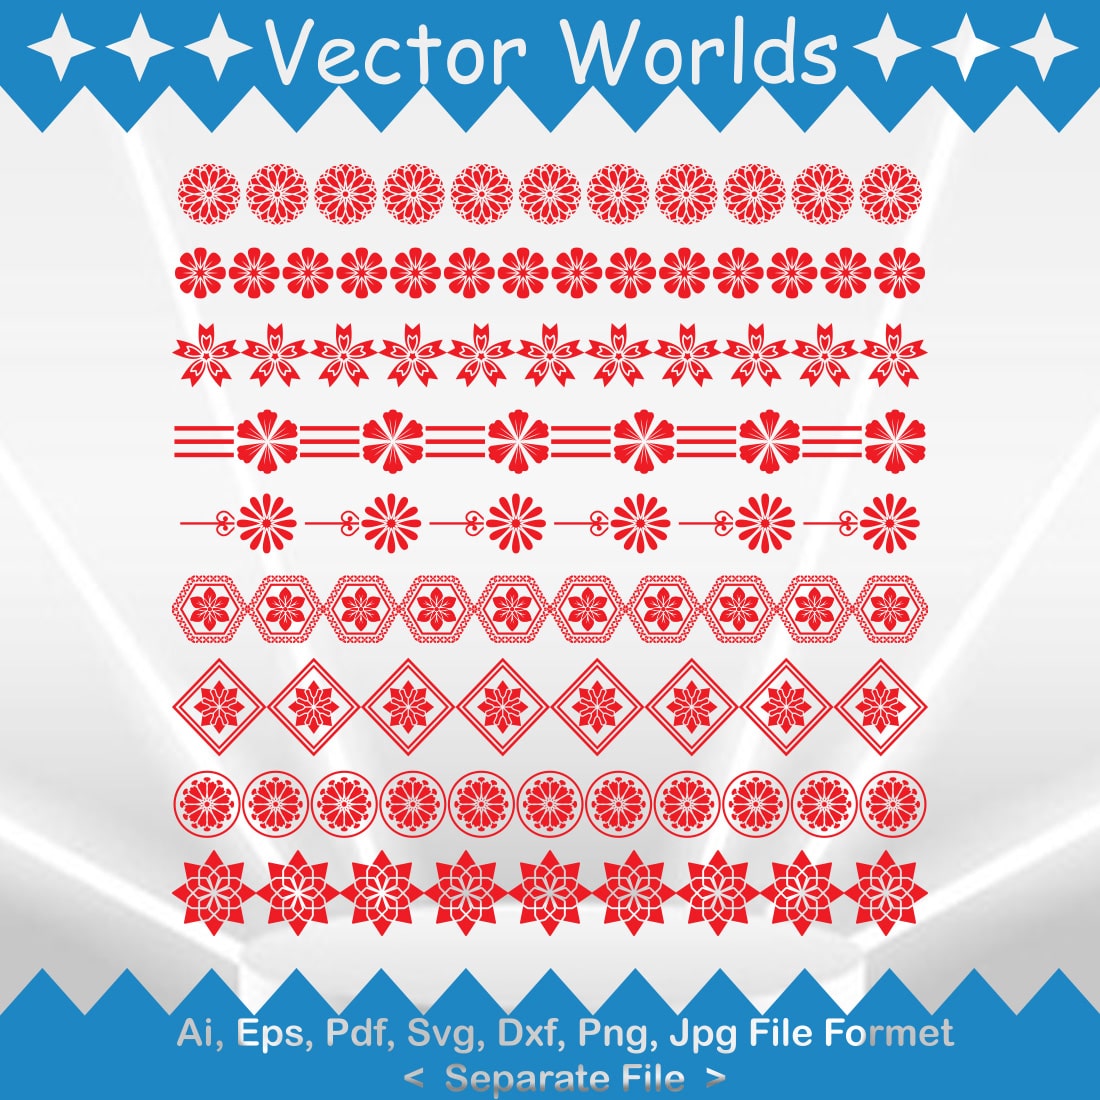 Ethnic Ornament SVG Vector Design cover image.